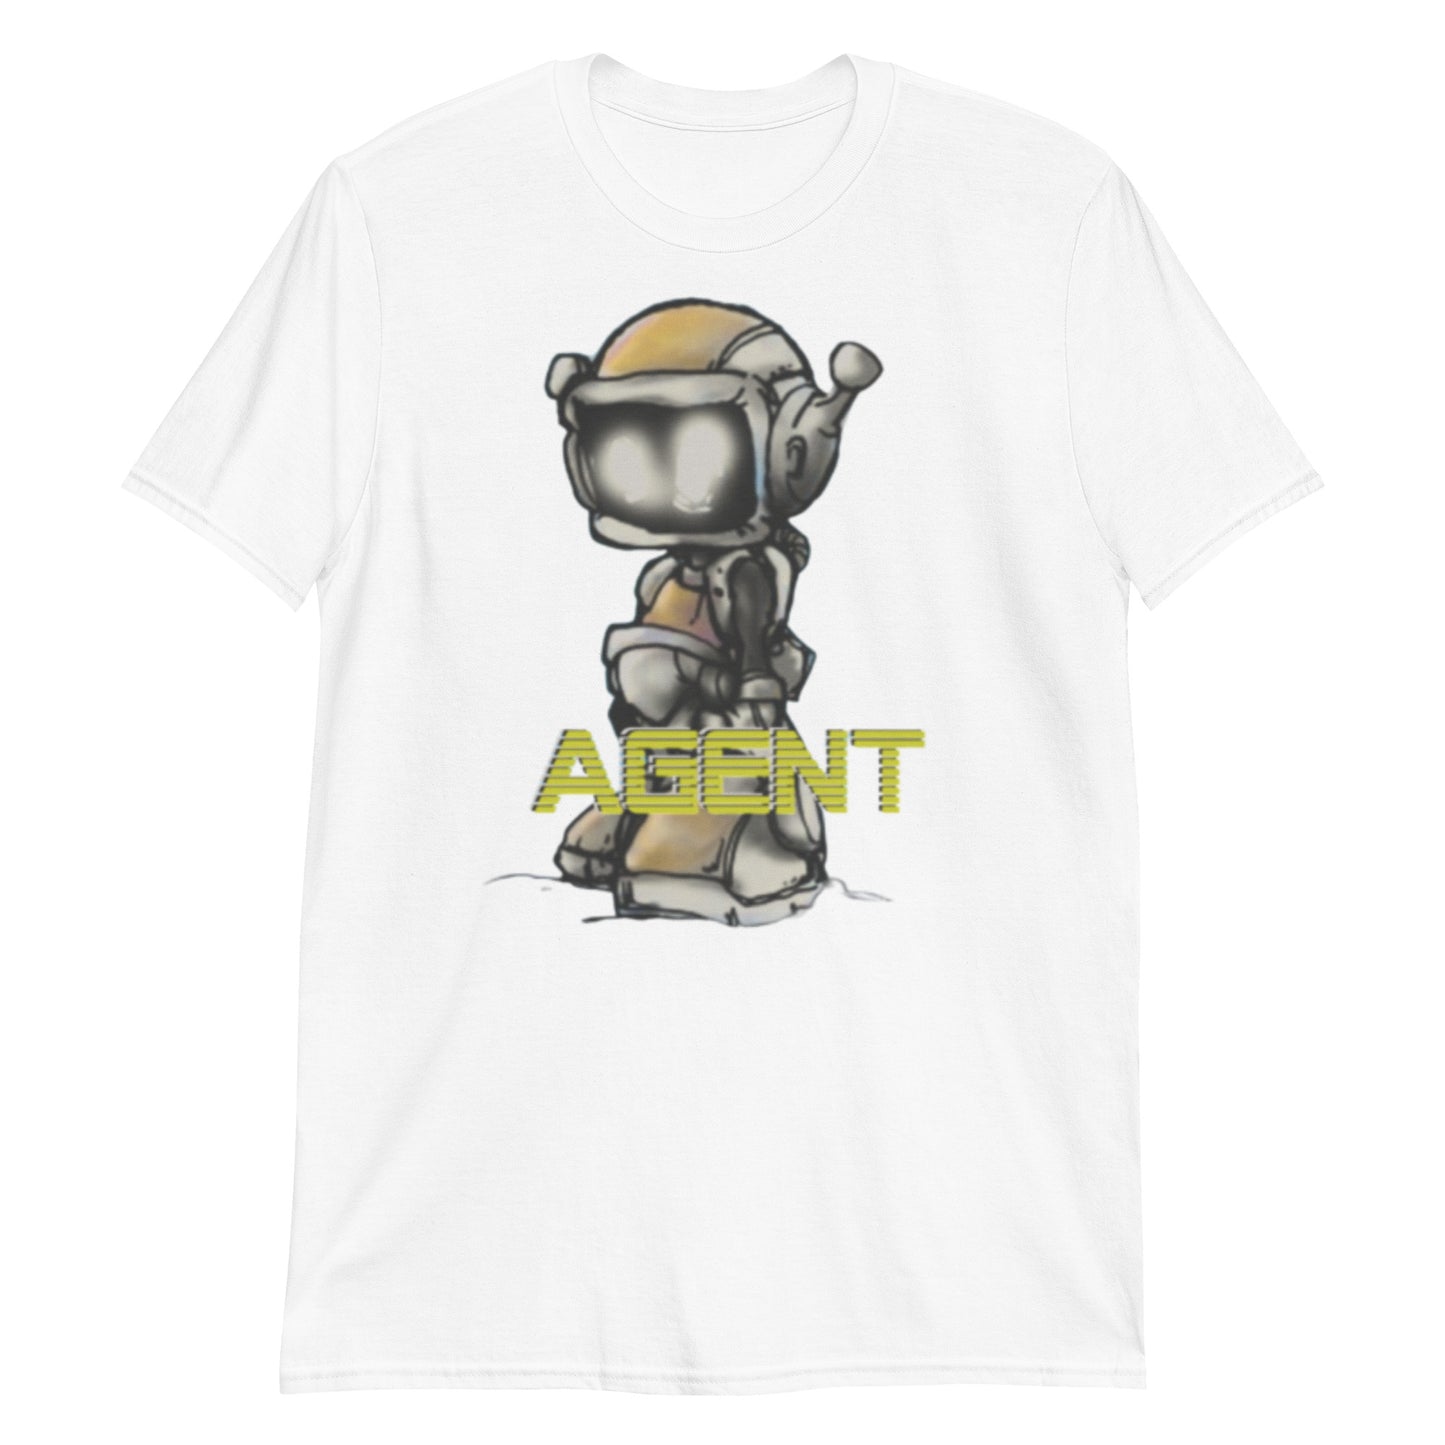 Agent Yellow Robot T-Shirt -Discount Tee